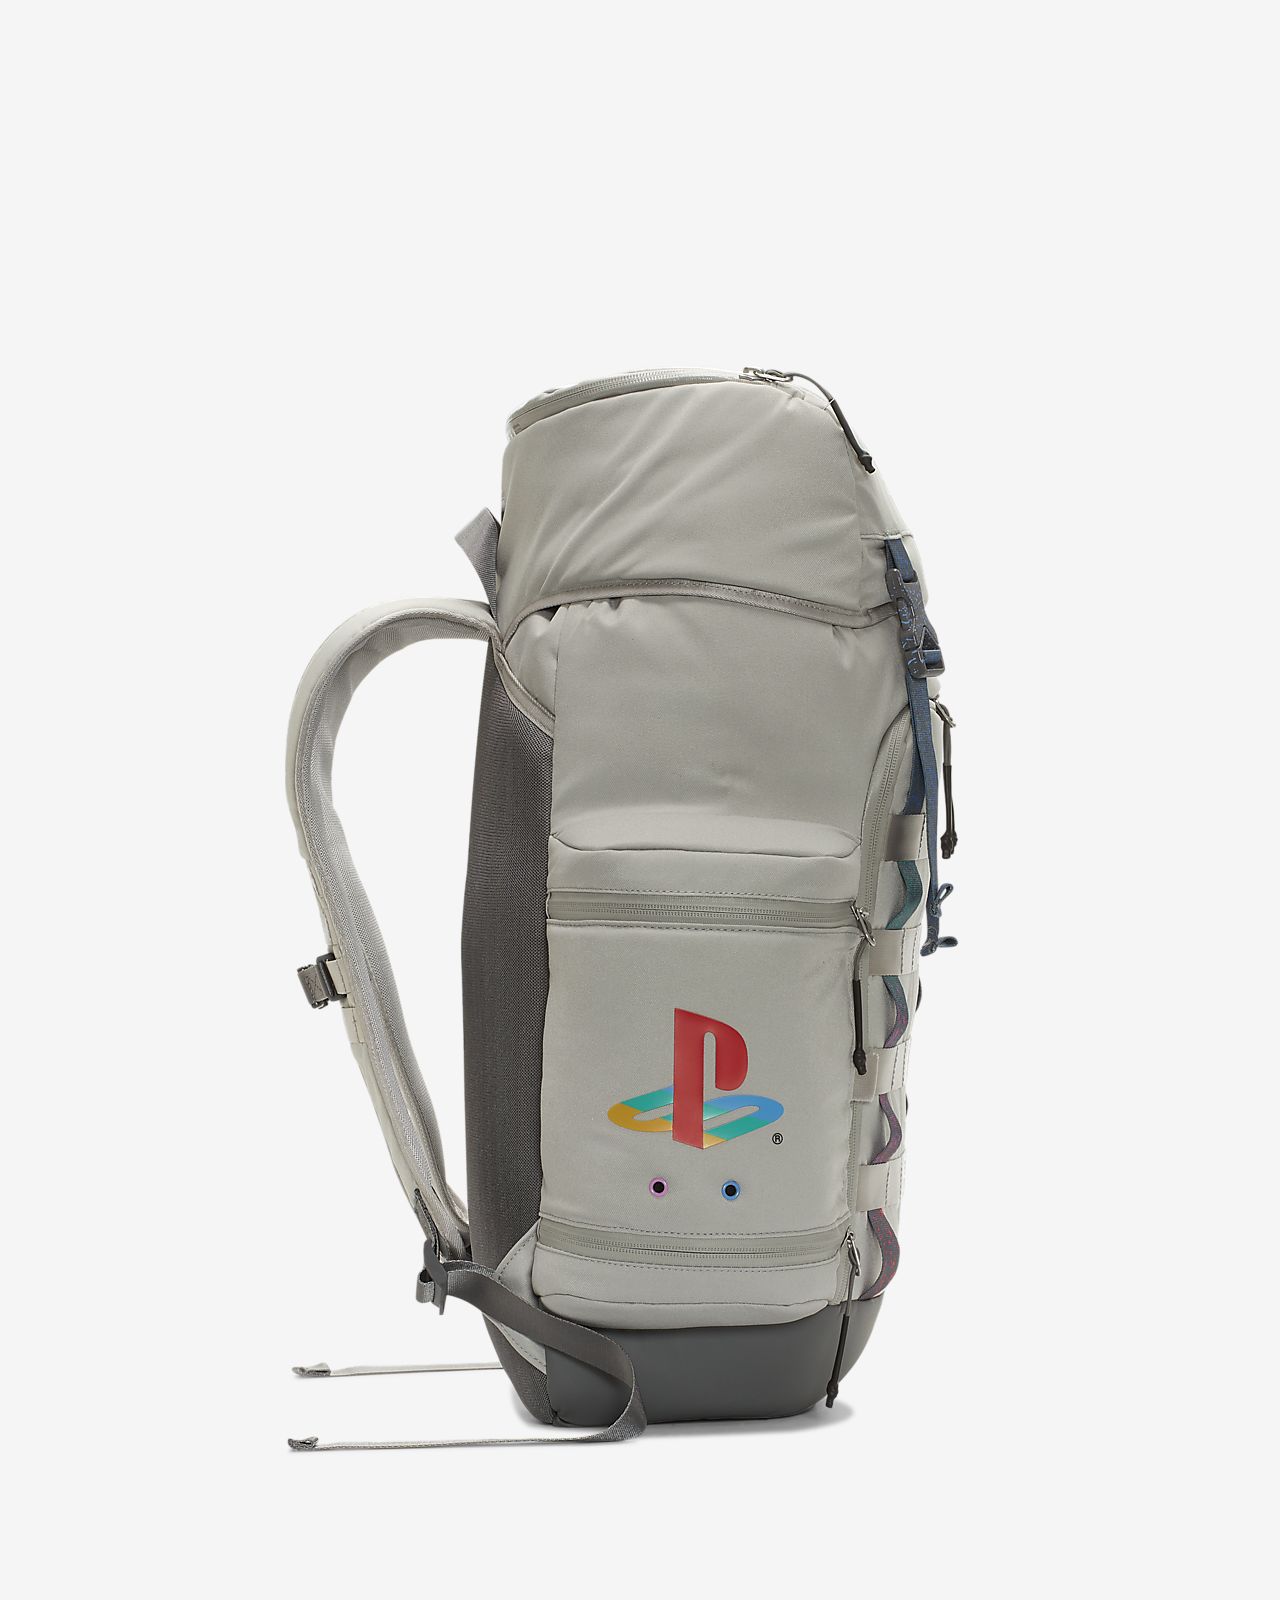 pg x nasa backpack